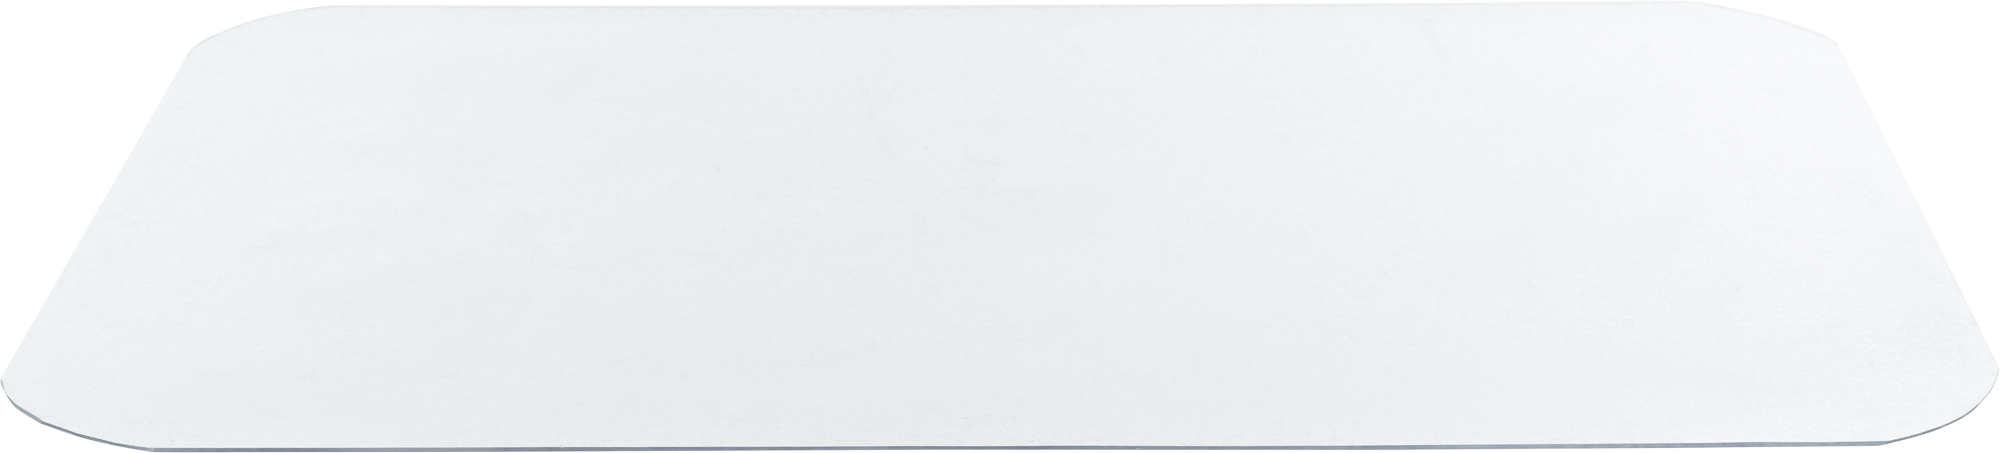 TRIXIE Napfunterlage, Vinyl, 48 × 30 cm, transparent